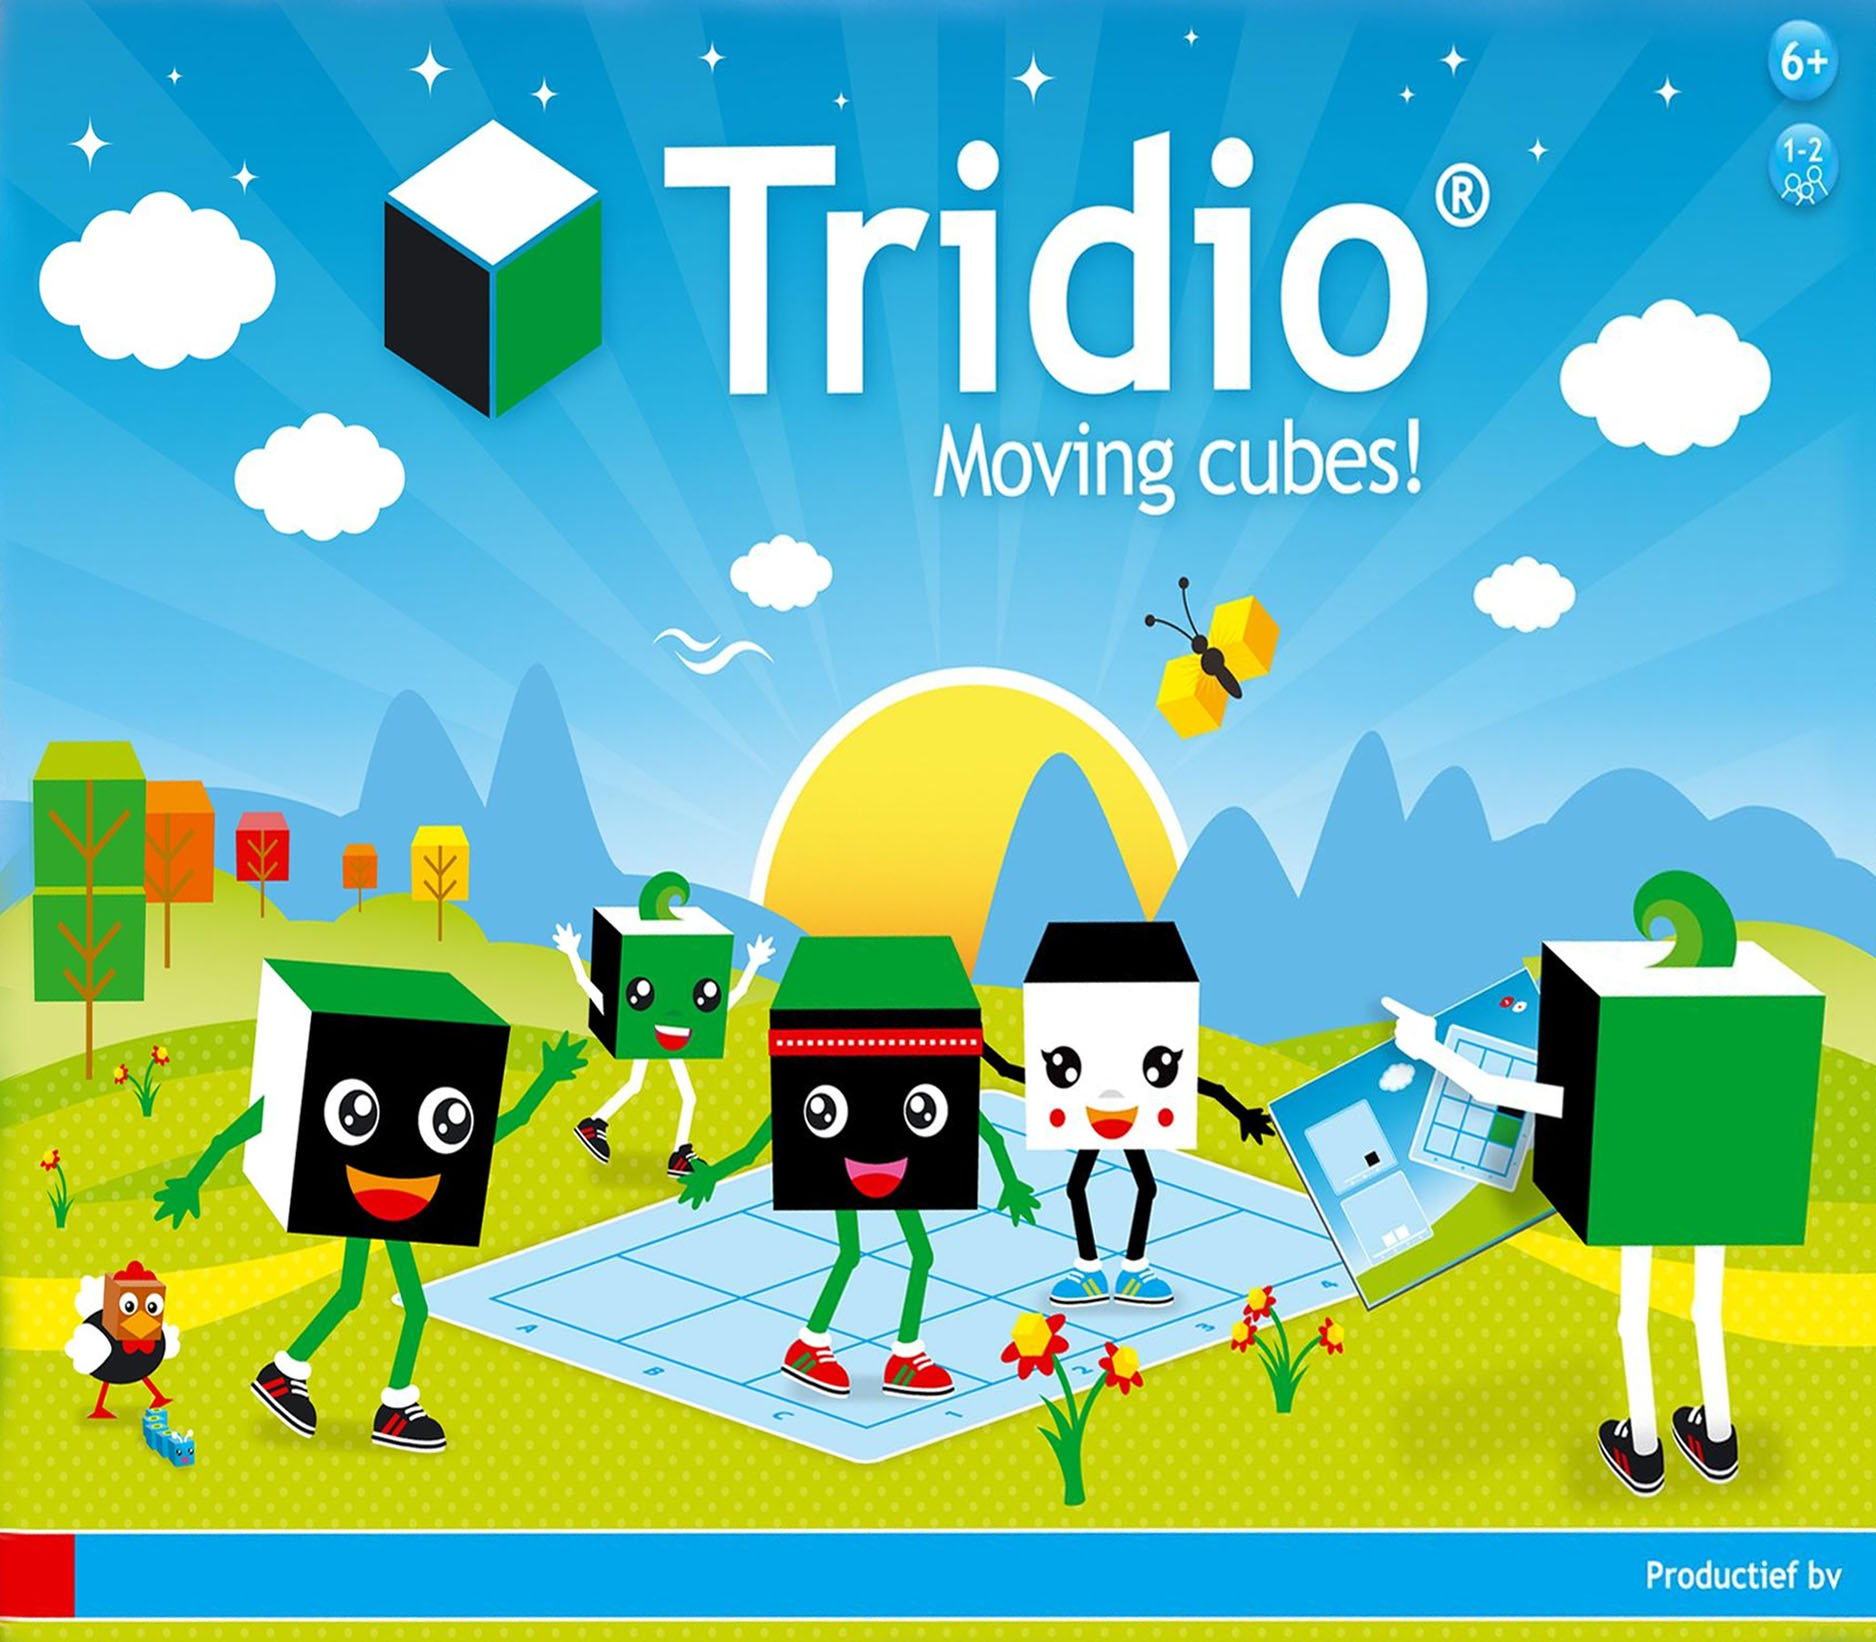 Tridio - Moving cubes!